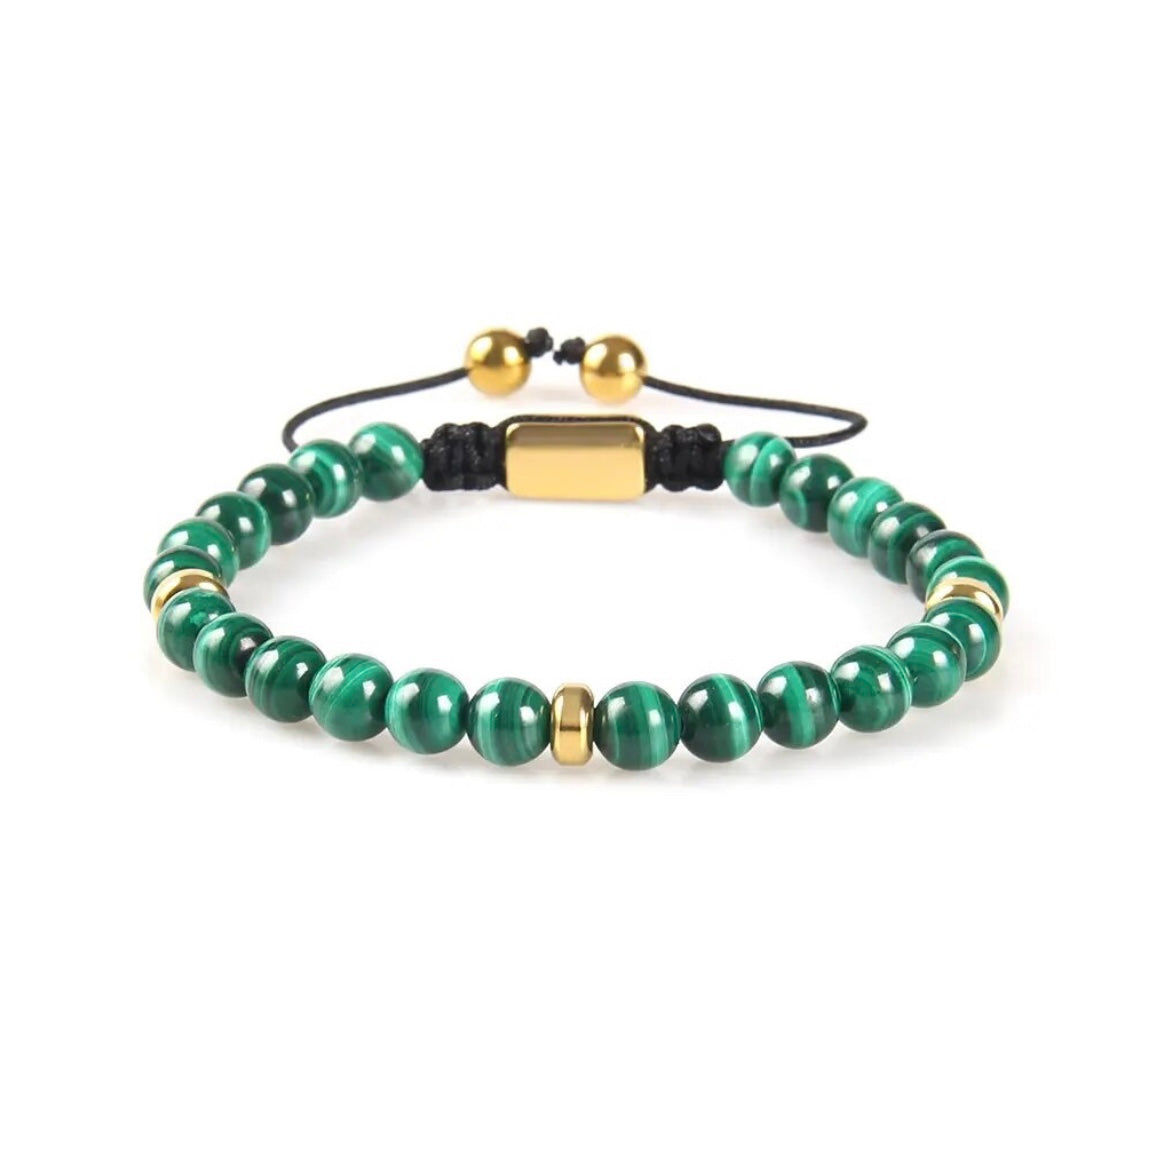 Malachite Stone & Gold Beads Bracelet - My Harmony Tree